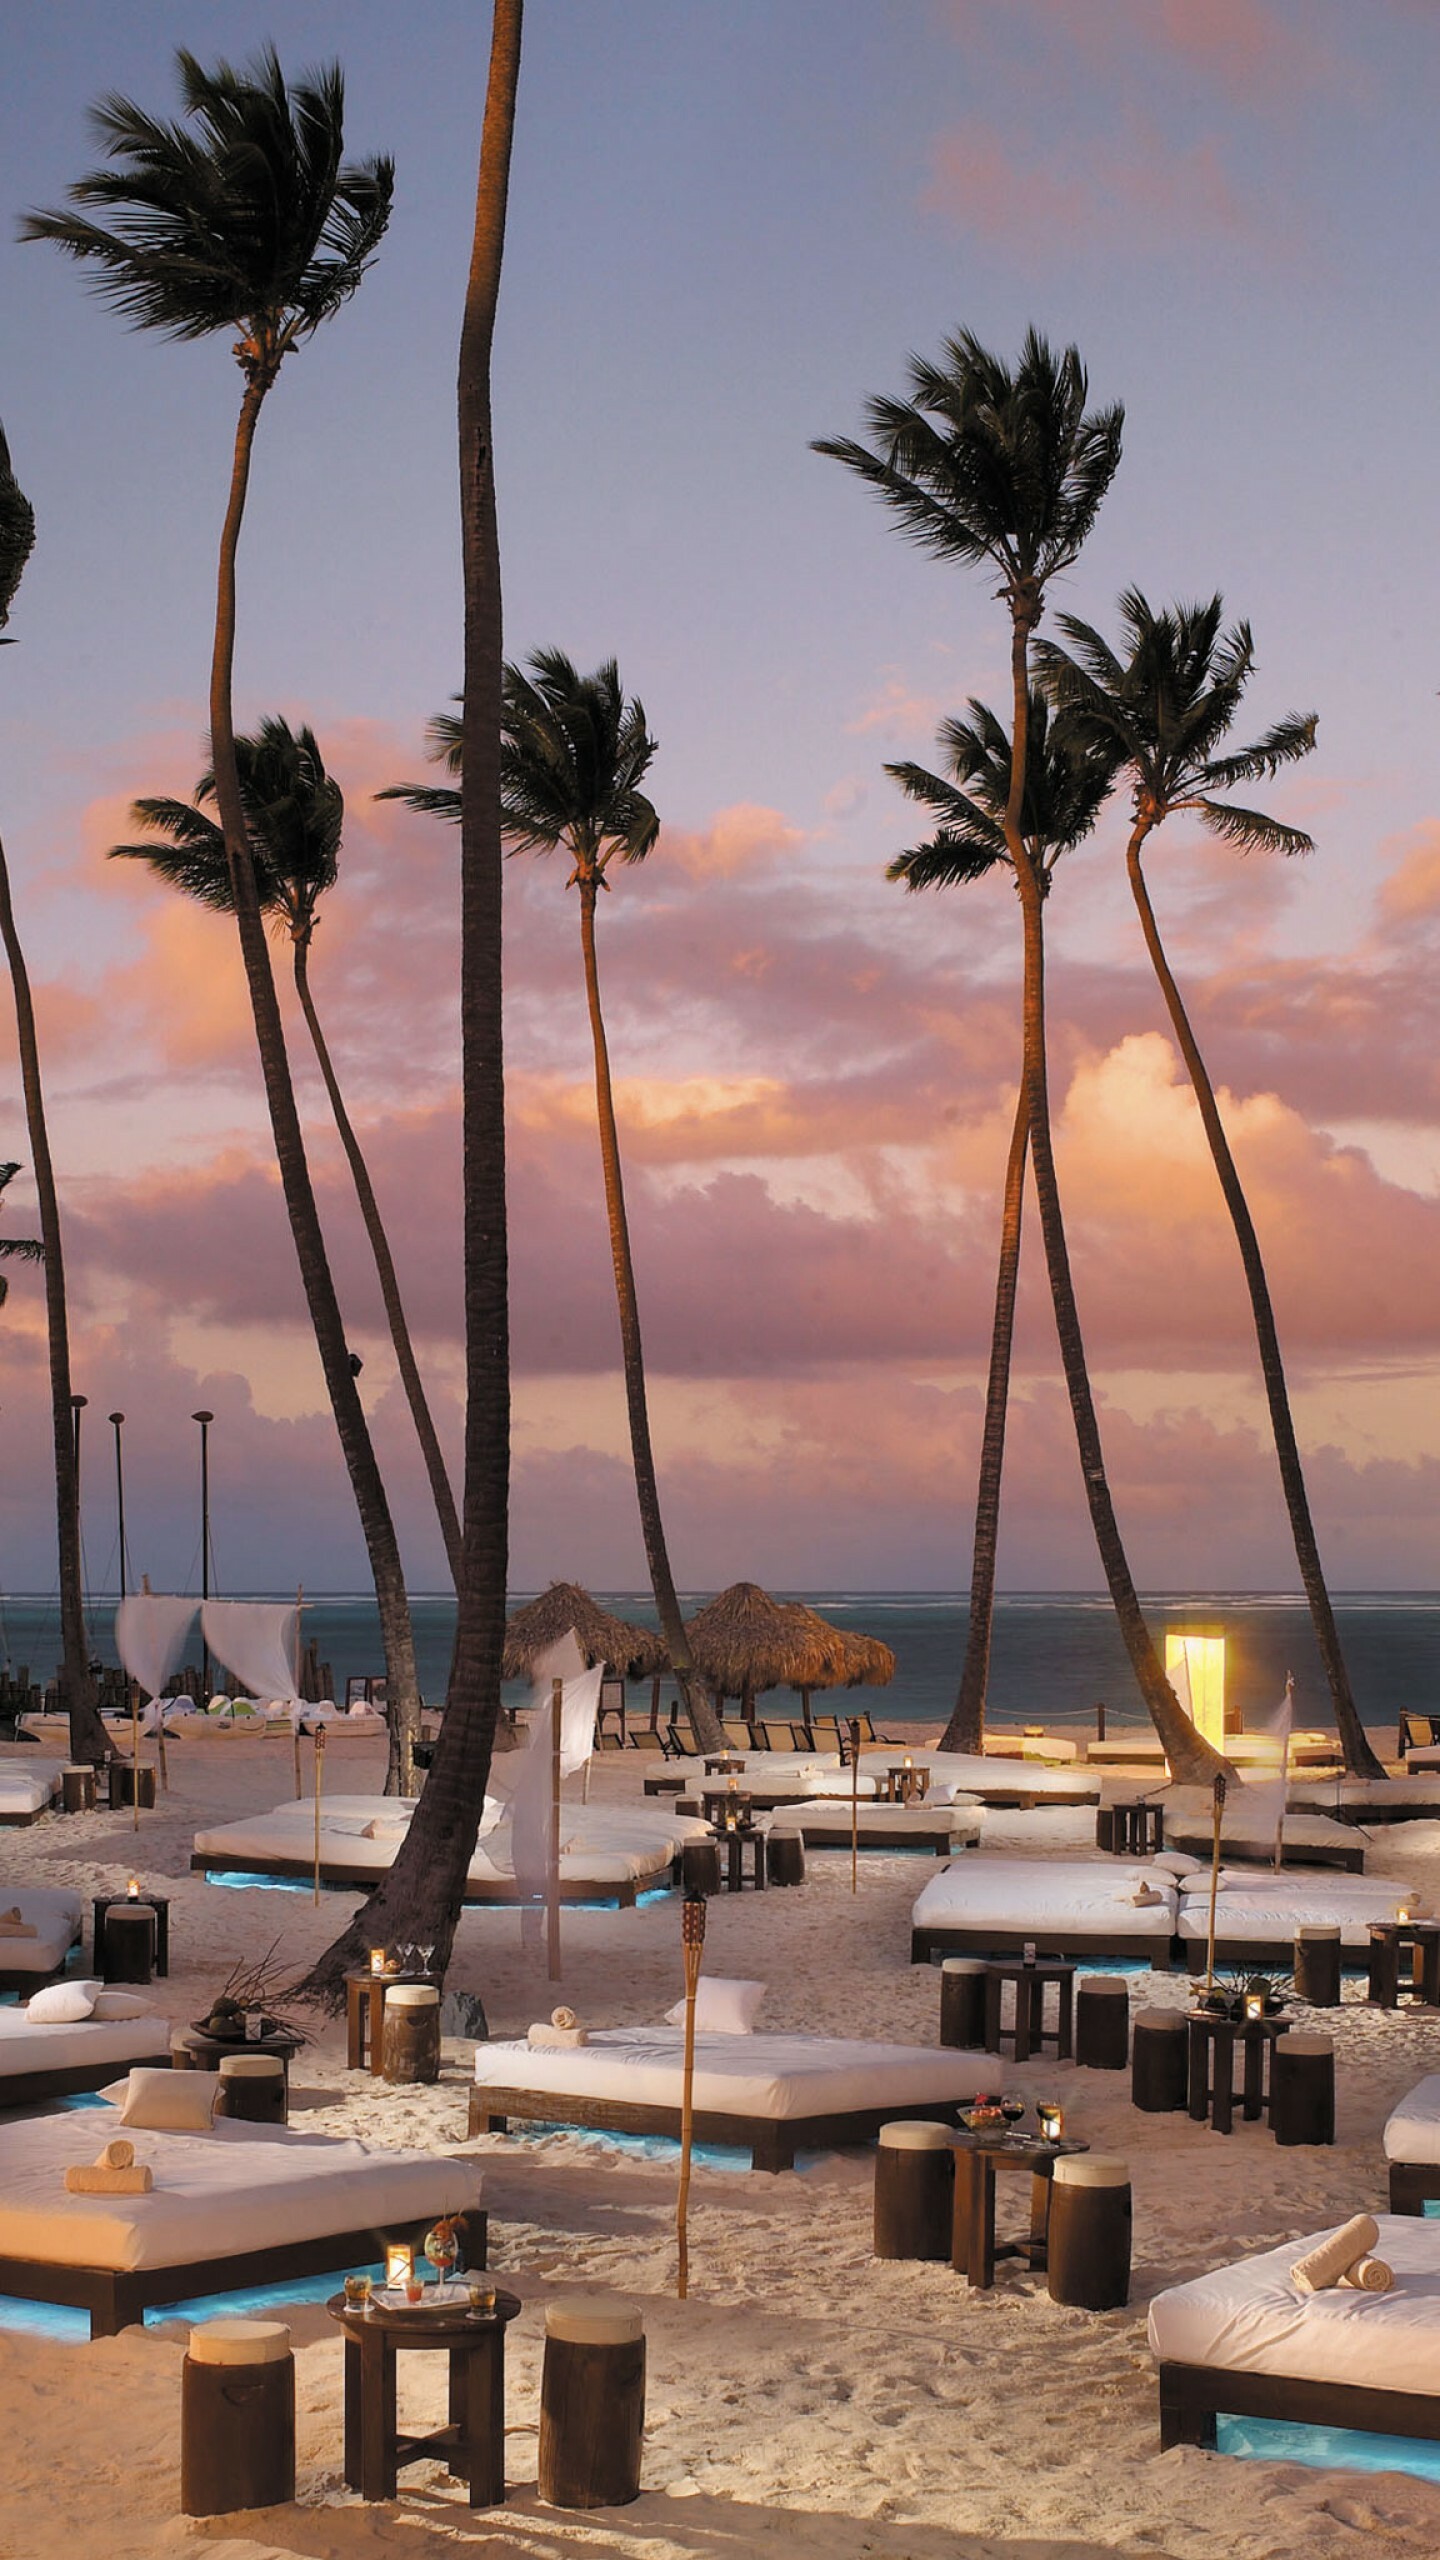 Dominican Republic: Paradisus Palma Real, Punta Kana, Tourism, Travel, Resort, Vacation. 1440x2560 HD Wallpaper.